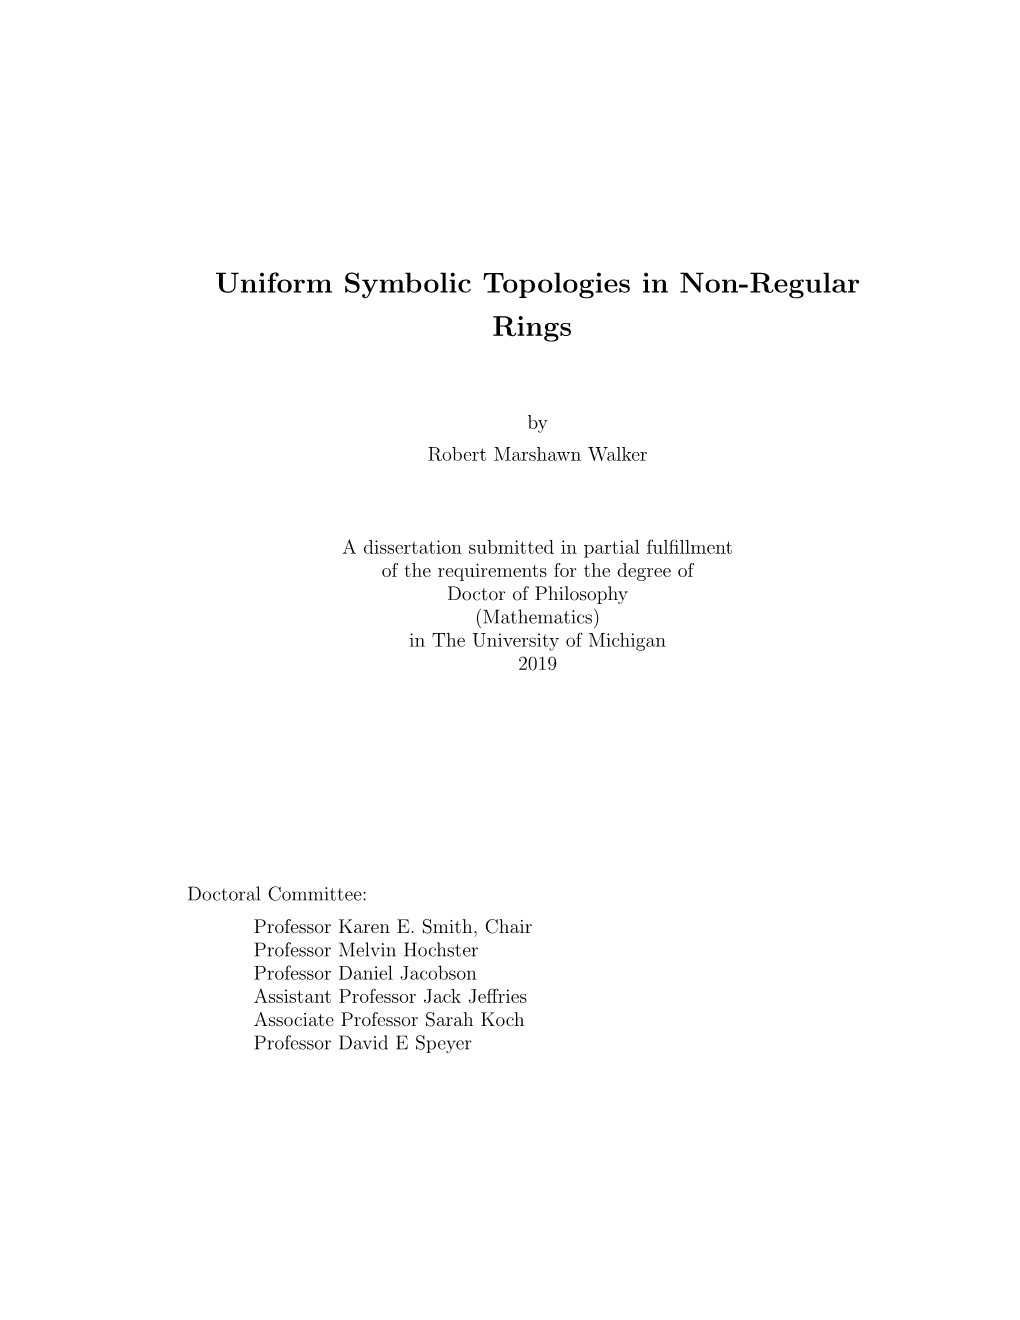 Uniform Symbolic Topologies in Non-Regular Rings